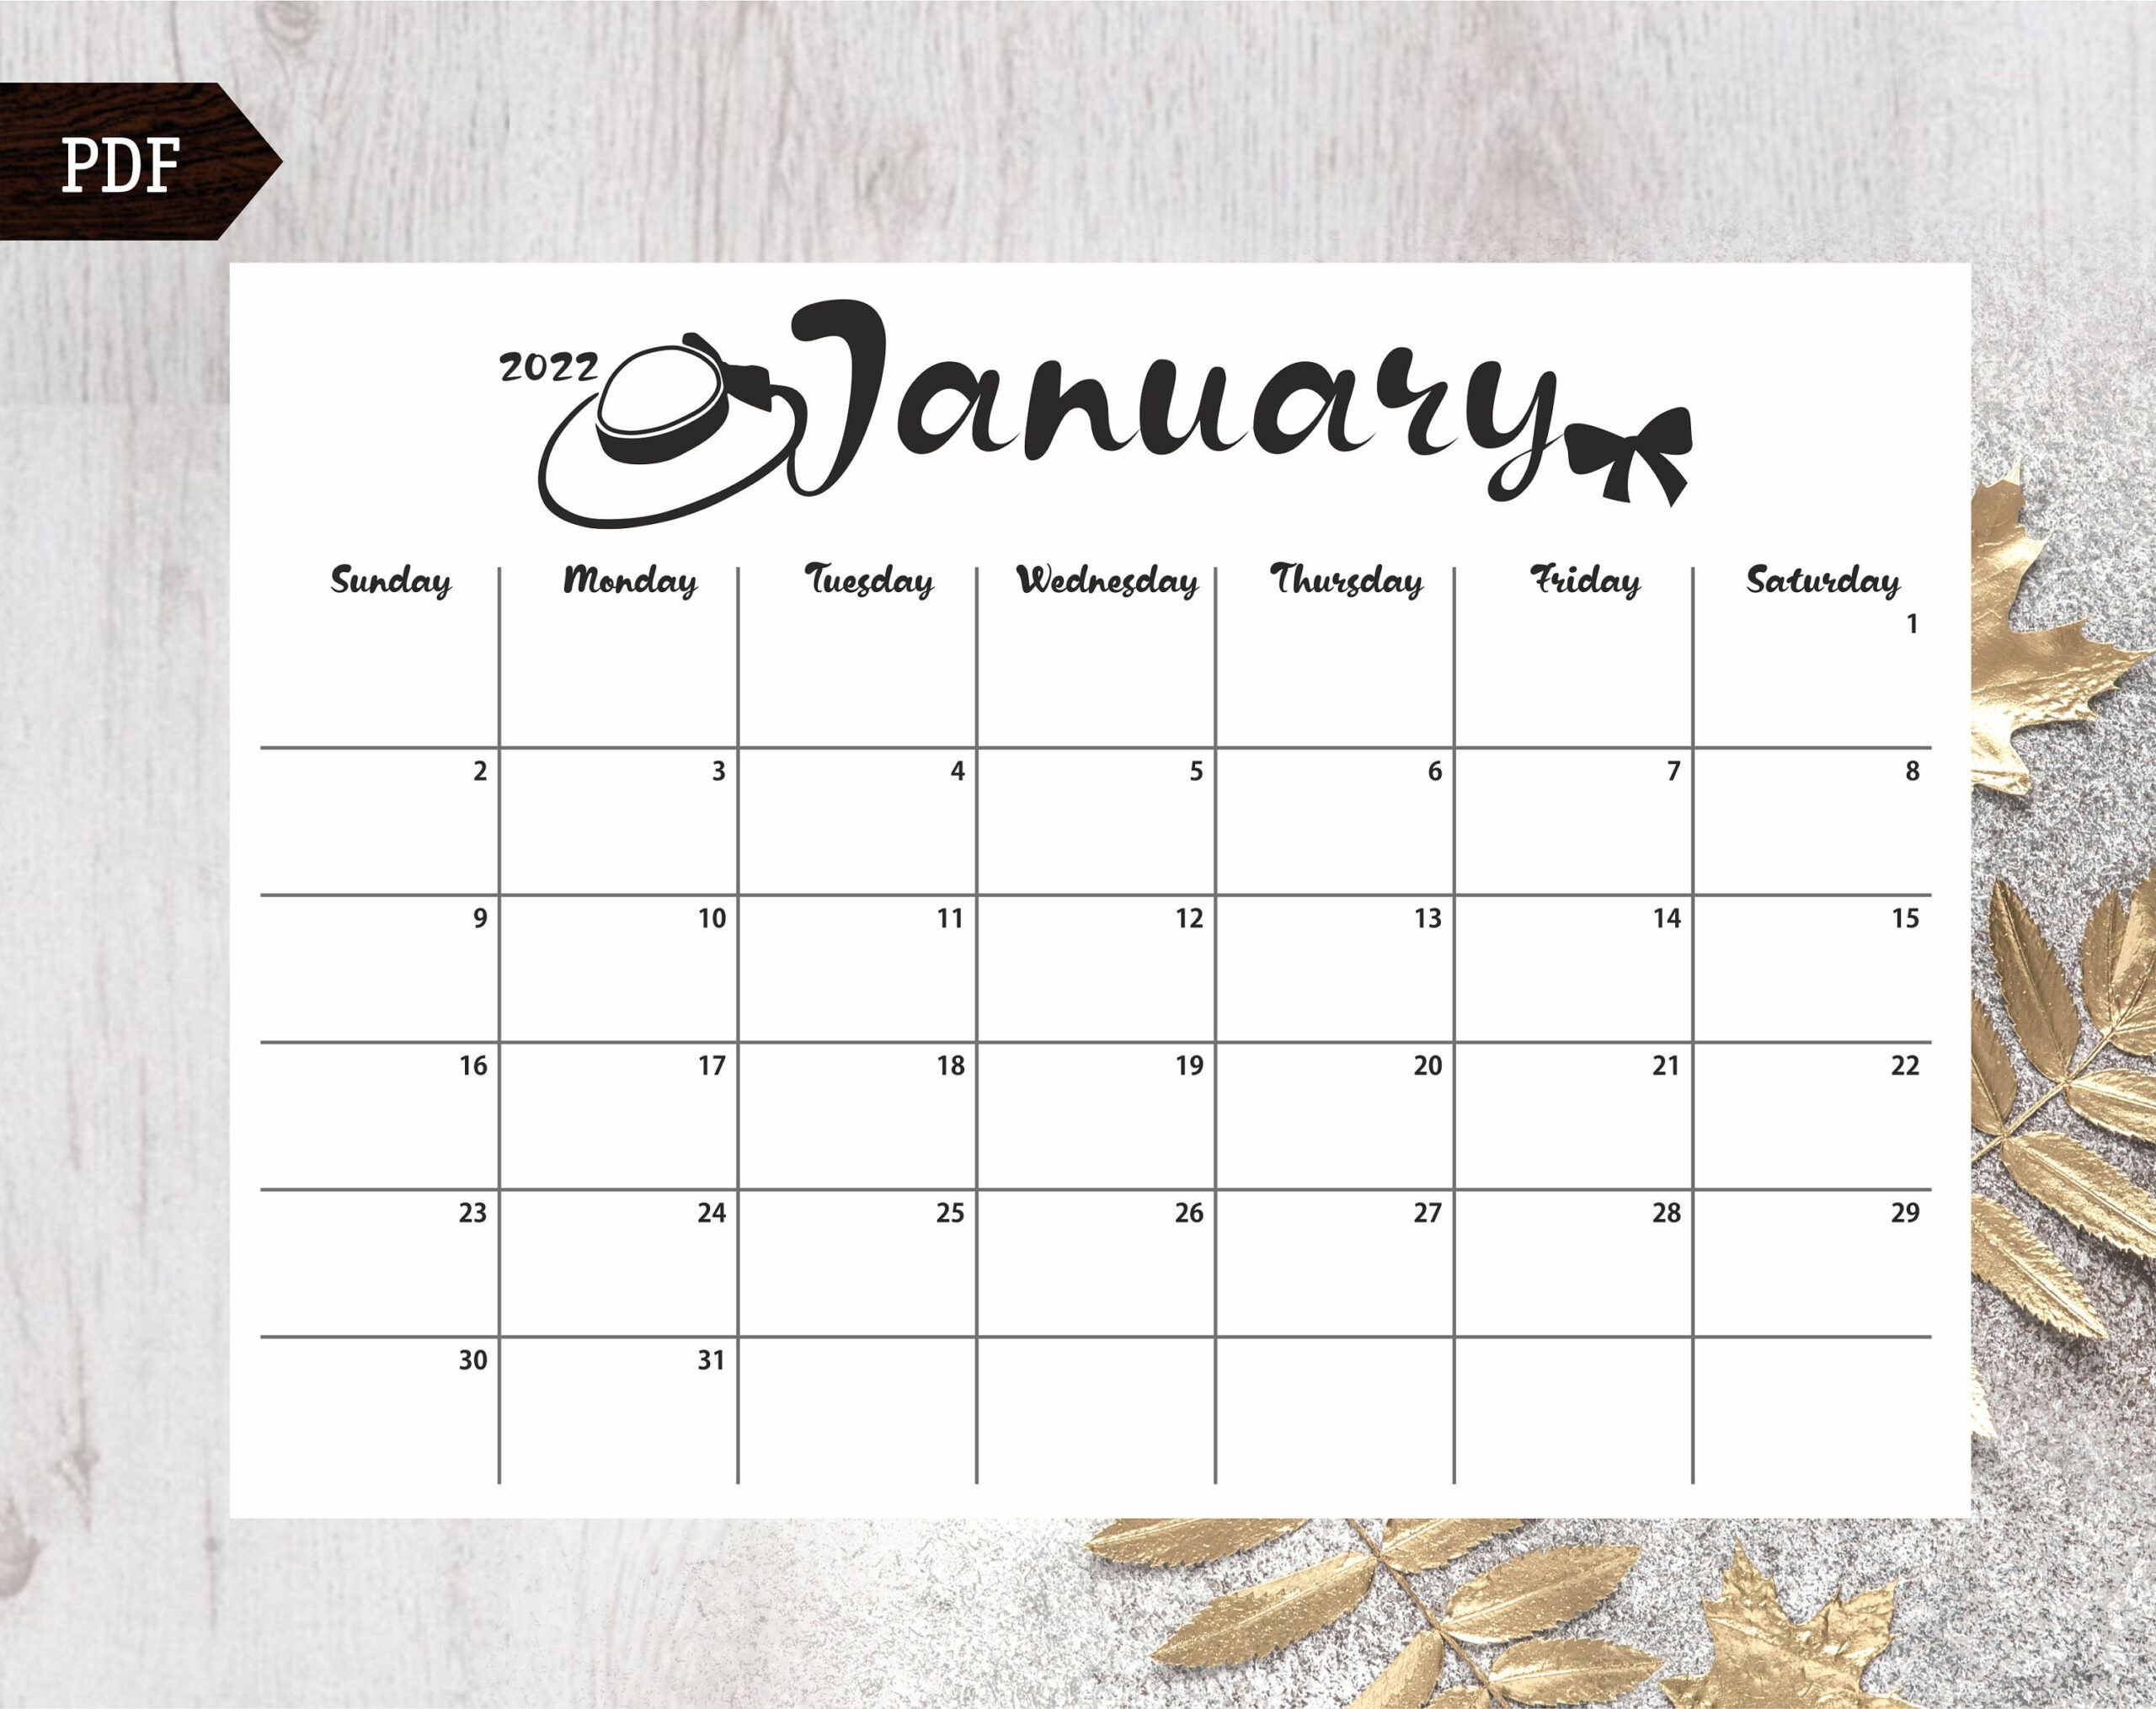 2022 White Calendar Wall Calendar Yearly Pdf Wall Calendar  Free Printable Calendar 2022 Small